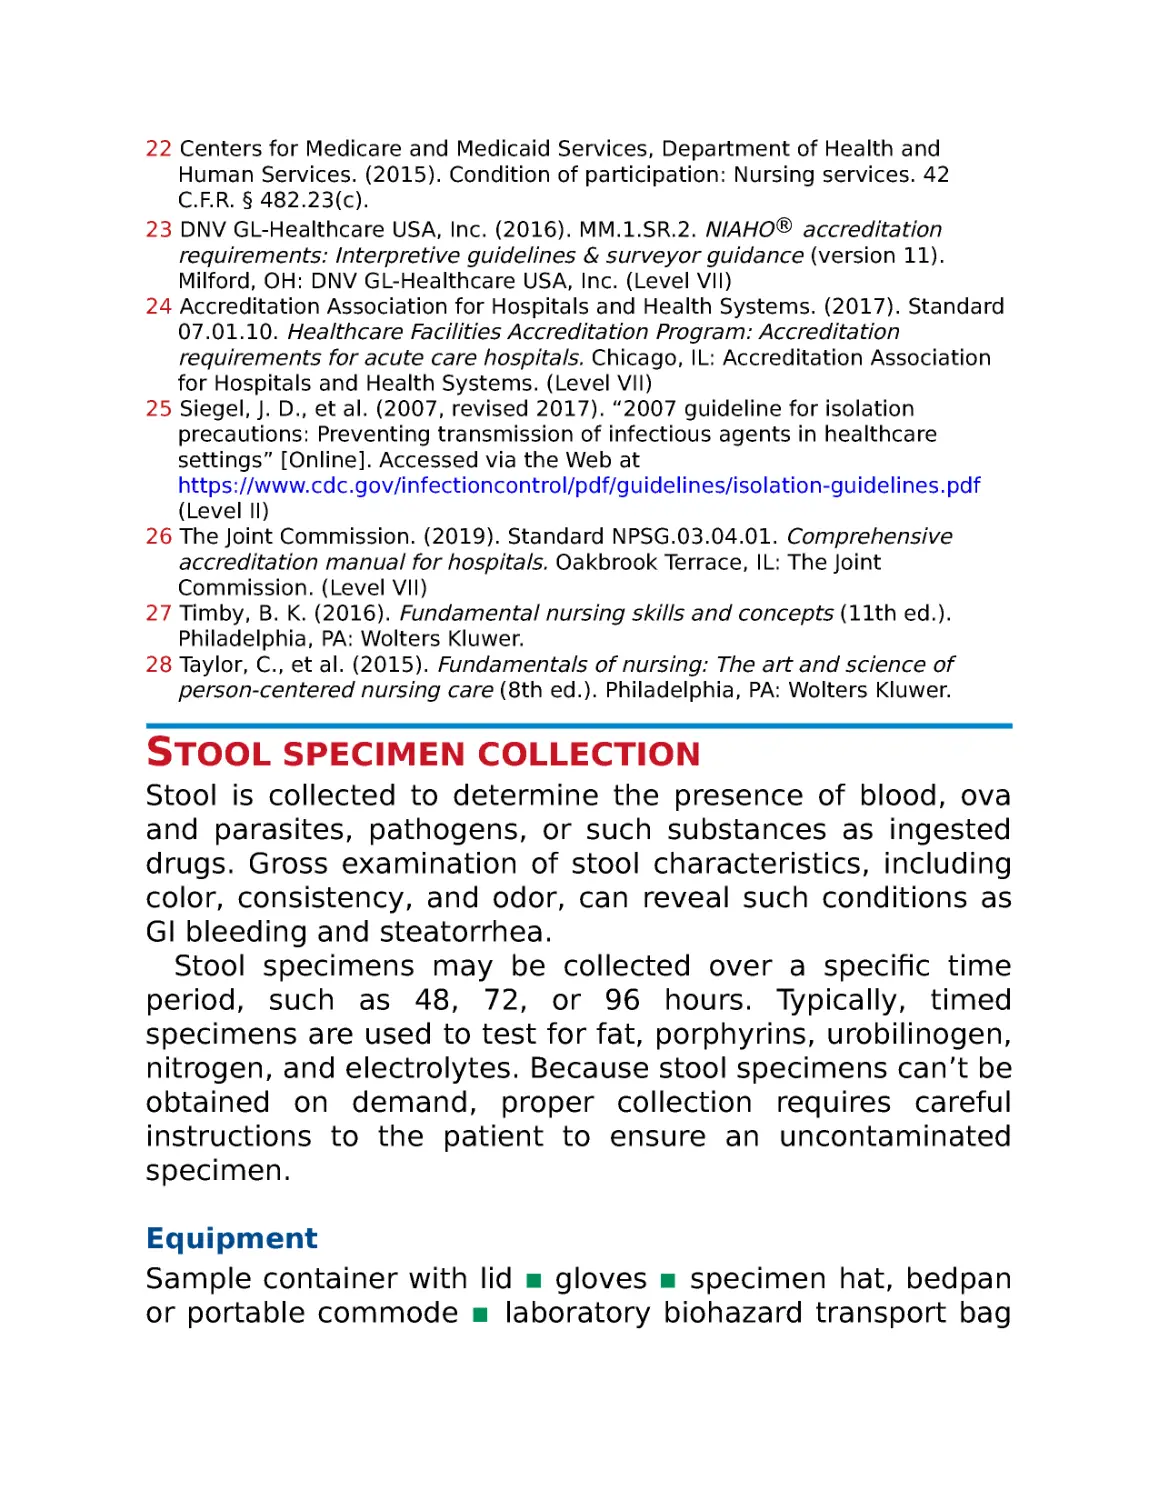 Stool specimen collection